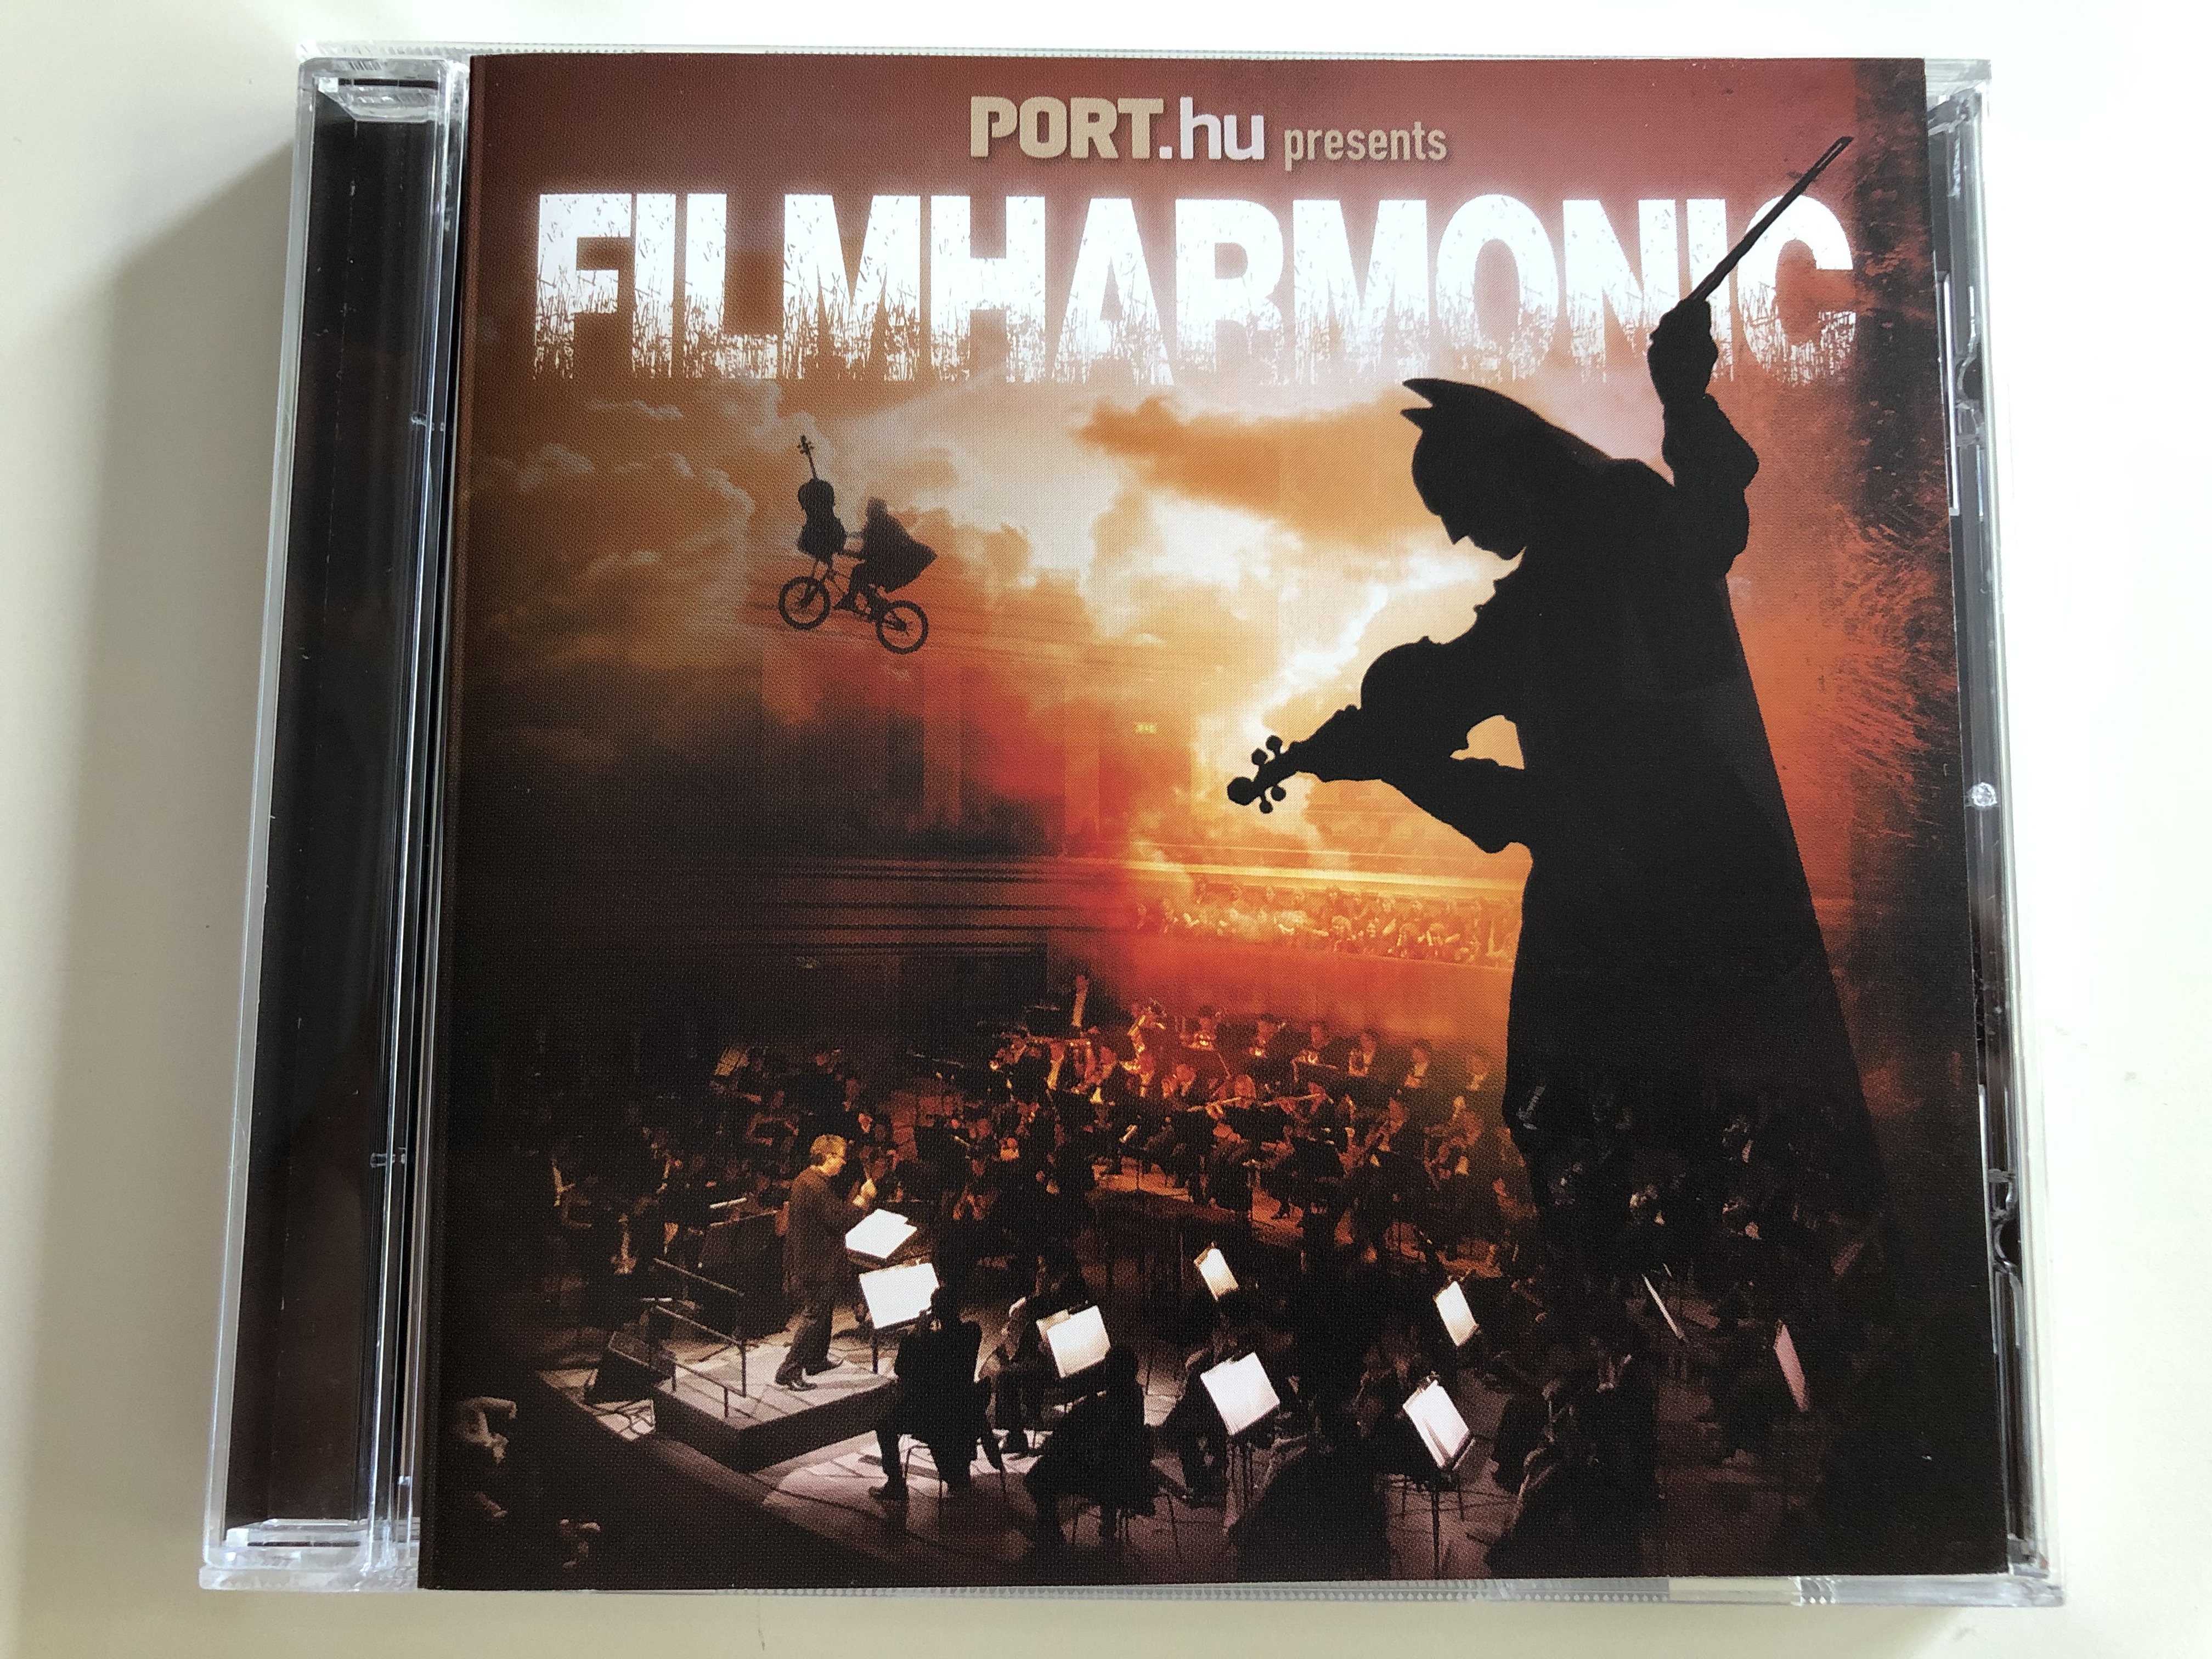 port.hu-presents-filmharmonic-audio-cd-2013-budafoki-dohn-nyi-zenekar-famous-movie-title-music-played-by-budapest-academic-choral-society-and-dohn-nyi-orchestra-budafok-conducted-by-g-bor-hollerung-fid-cd-011-1-.jpg